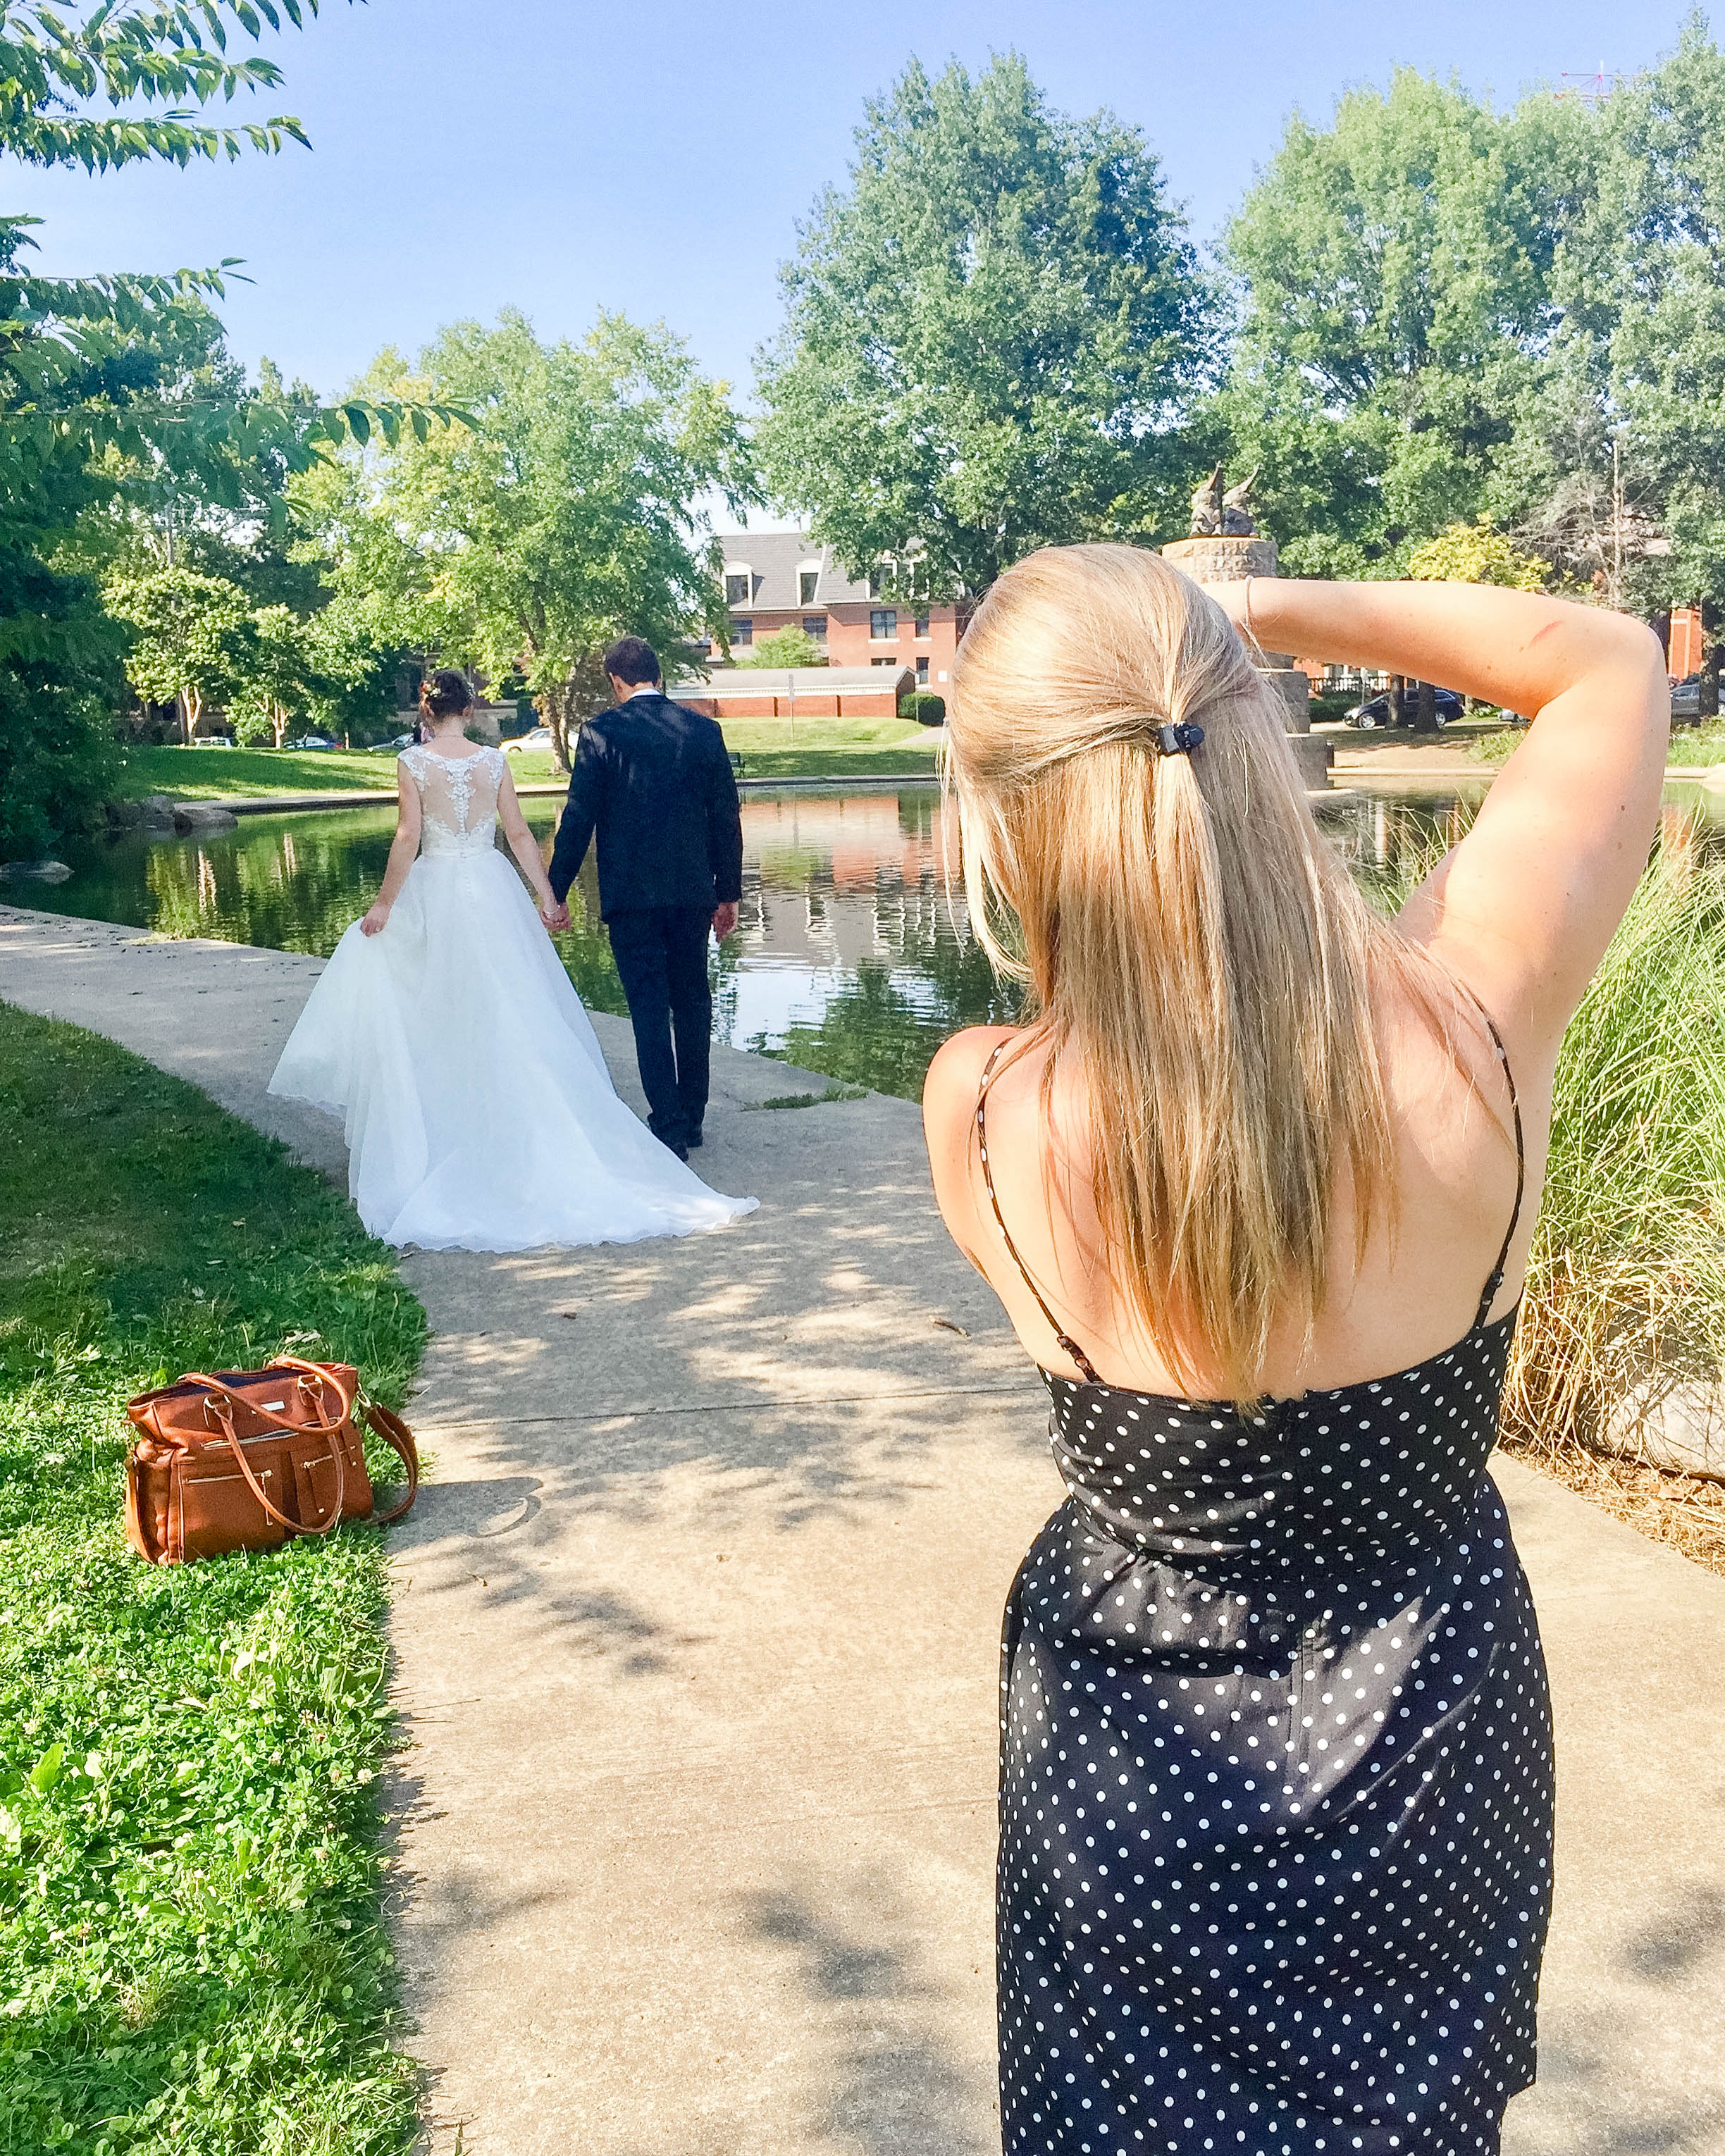 Sweet Williams Photography Behind The Scenes 2017 Wedding Season, Columbus Ohio Wedding Photographer